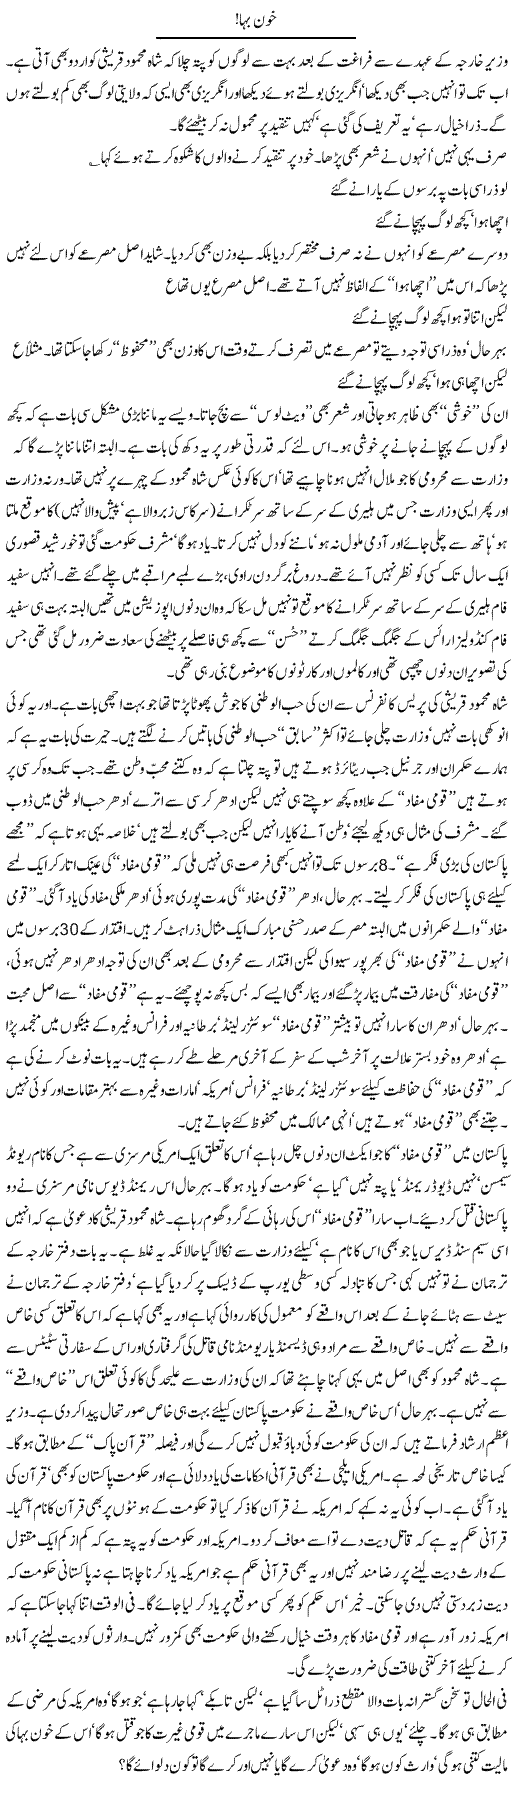 Shah Mehmood Express Column Abdullah Tariq 18 February 2011